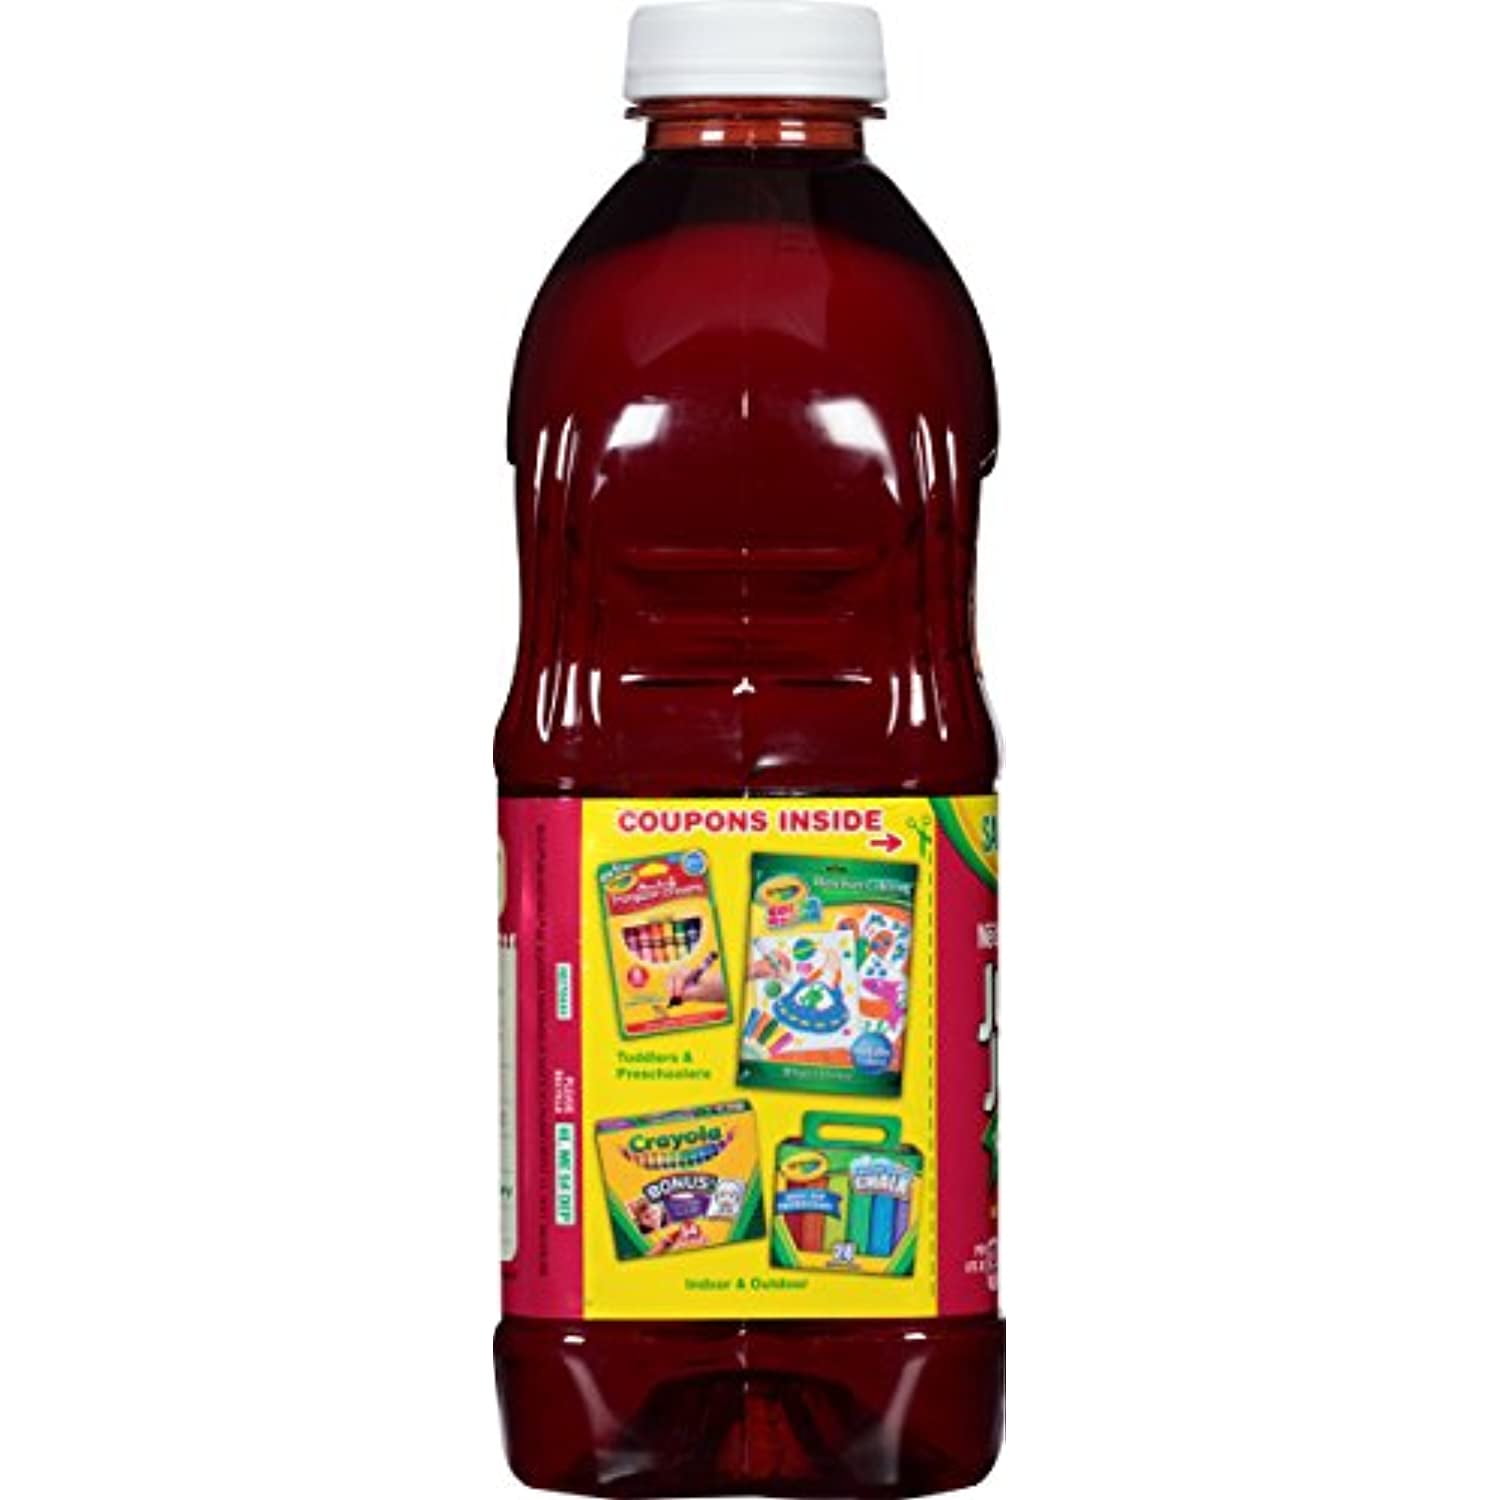 Hy-Vee Cherry Just Juice Bottle (64 oz)